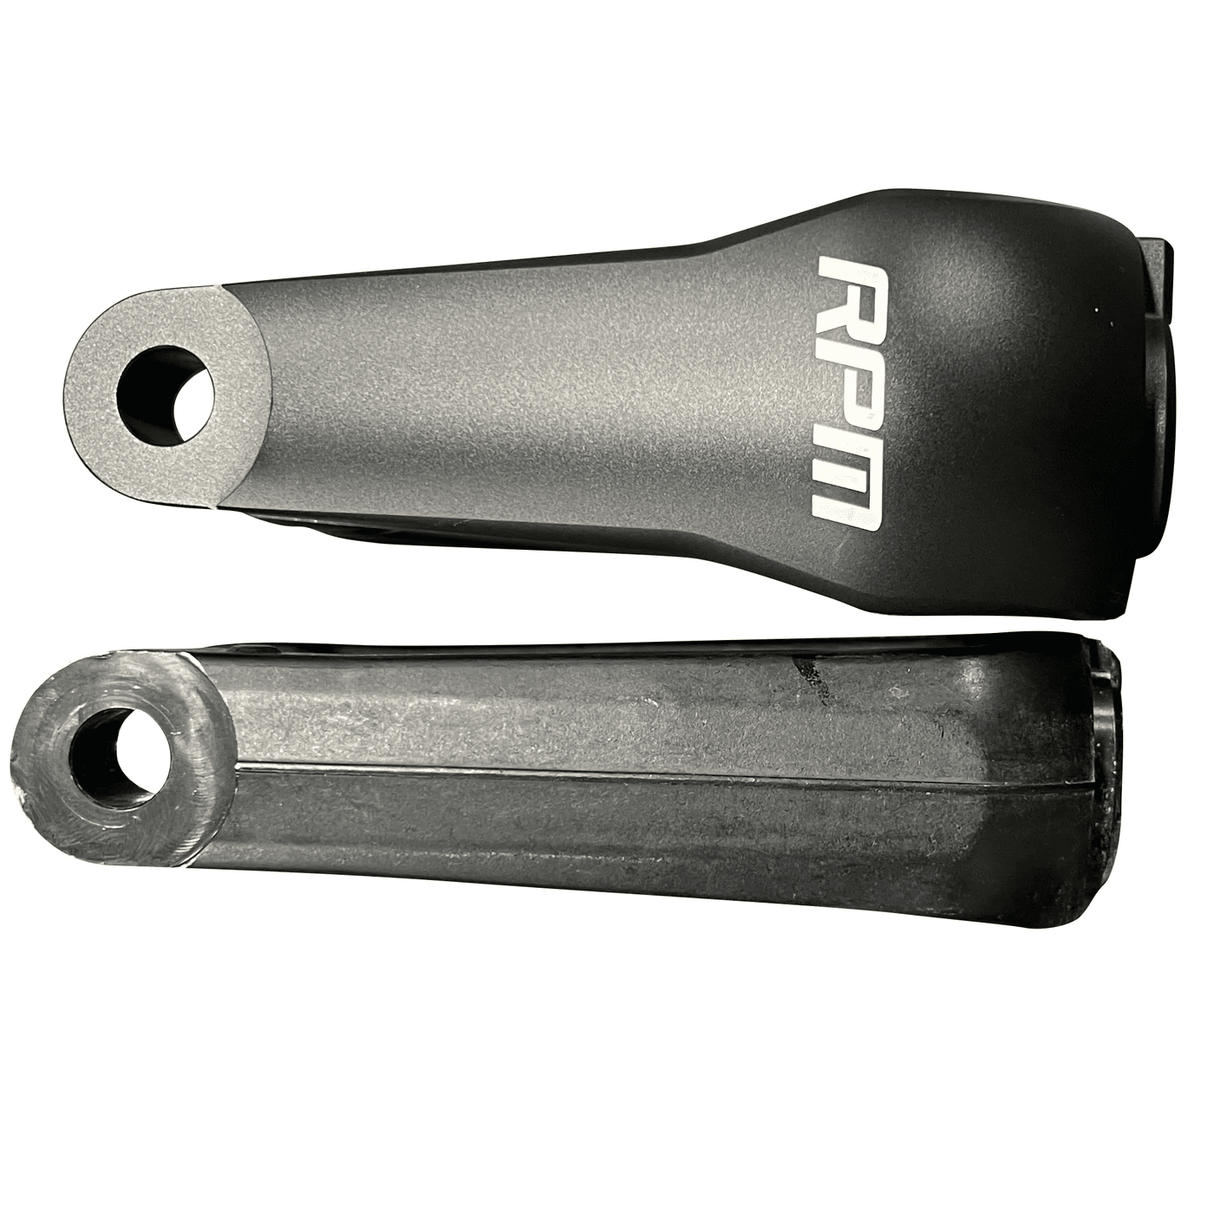 RPM Polaris RZR Pro R / Turbo R Billet Lower Front Shock Tuning Fork